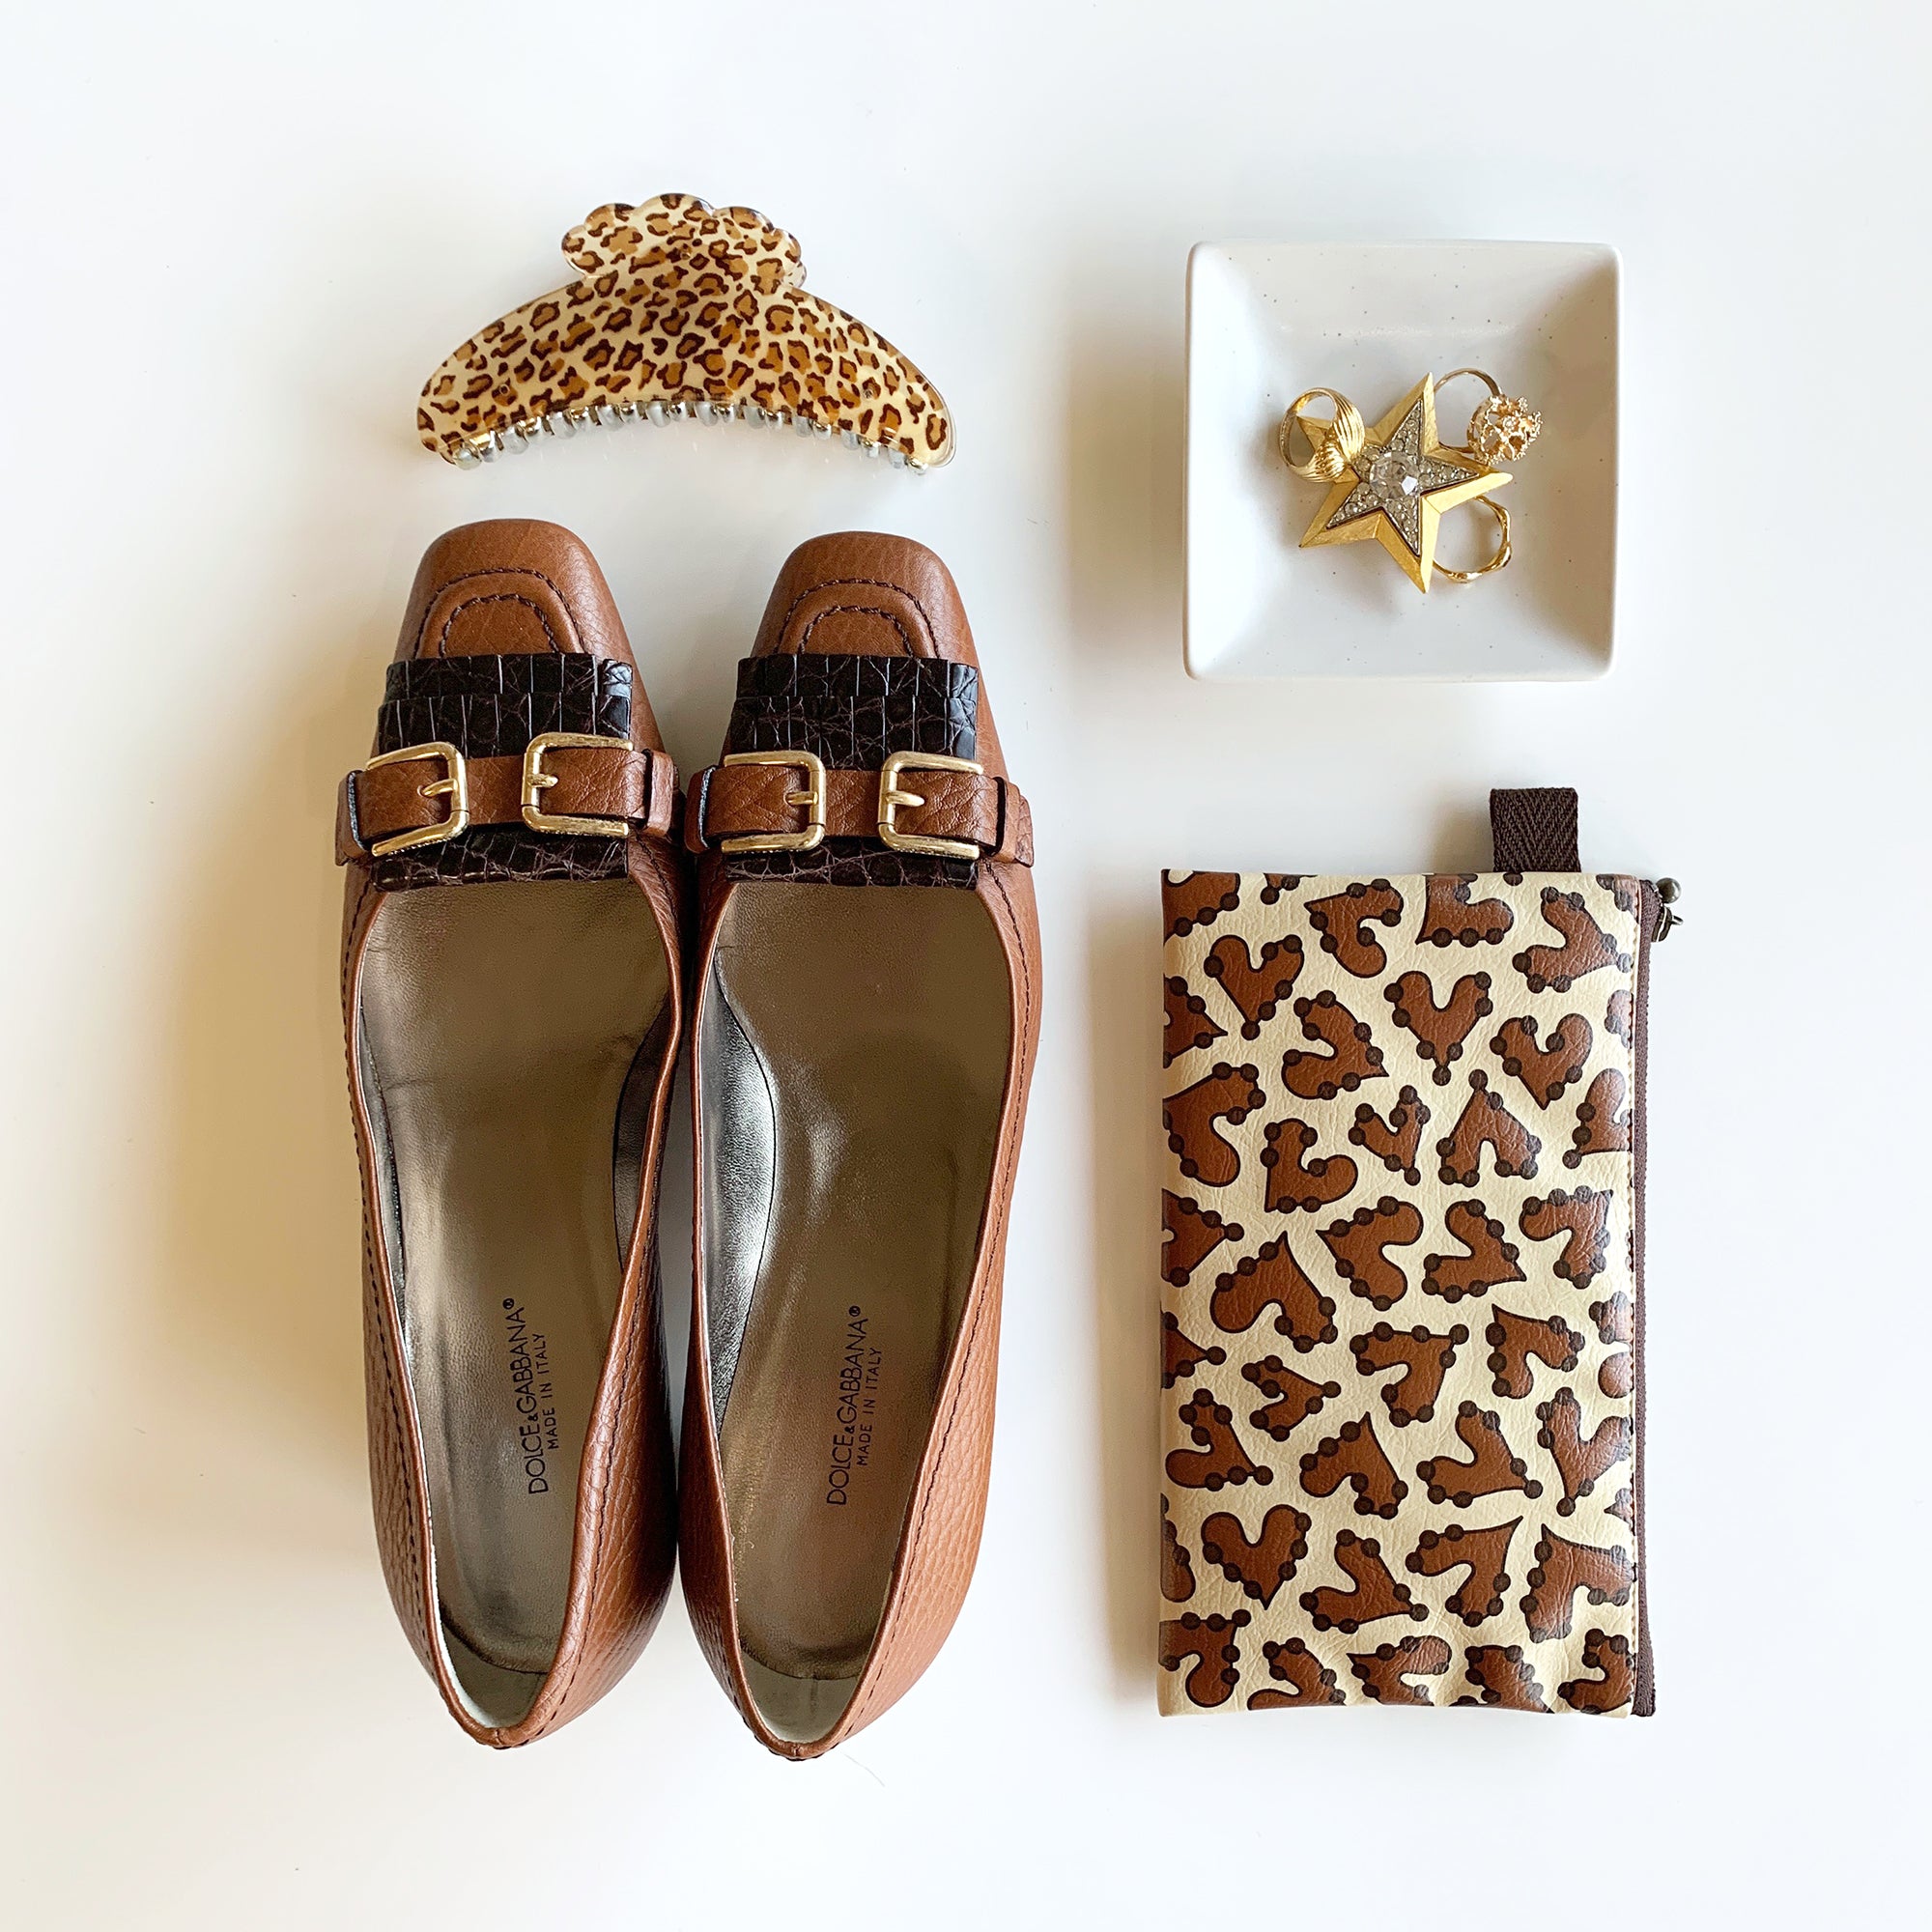 Flat Pouch “HEARTic Leopard” _ Chocolate Beige